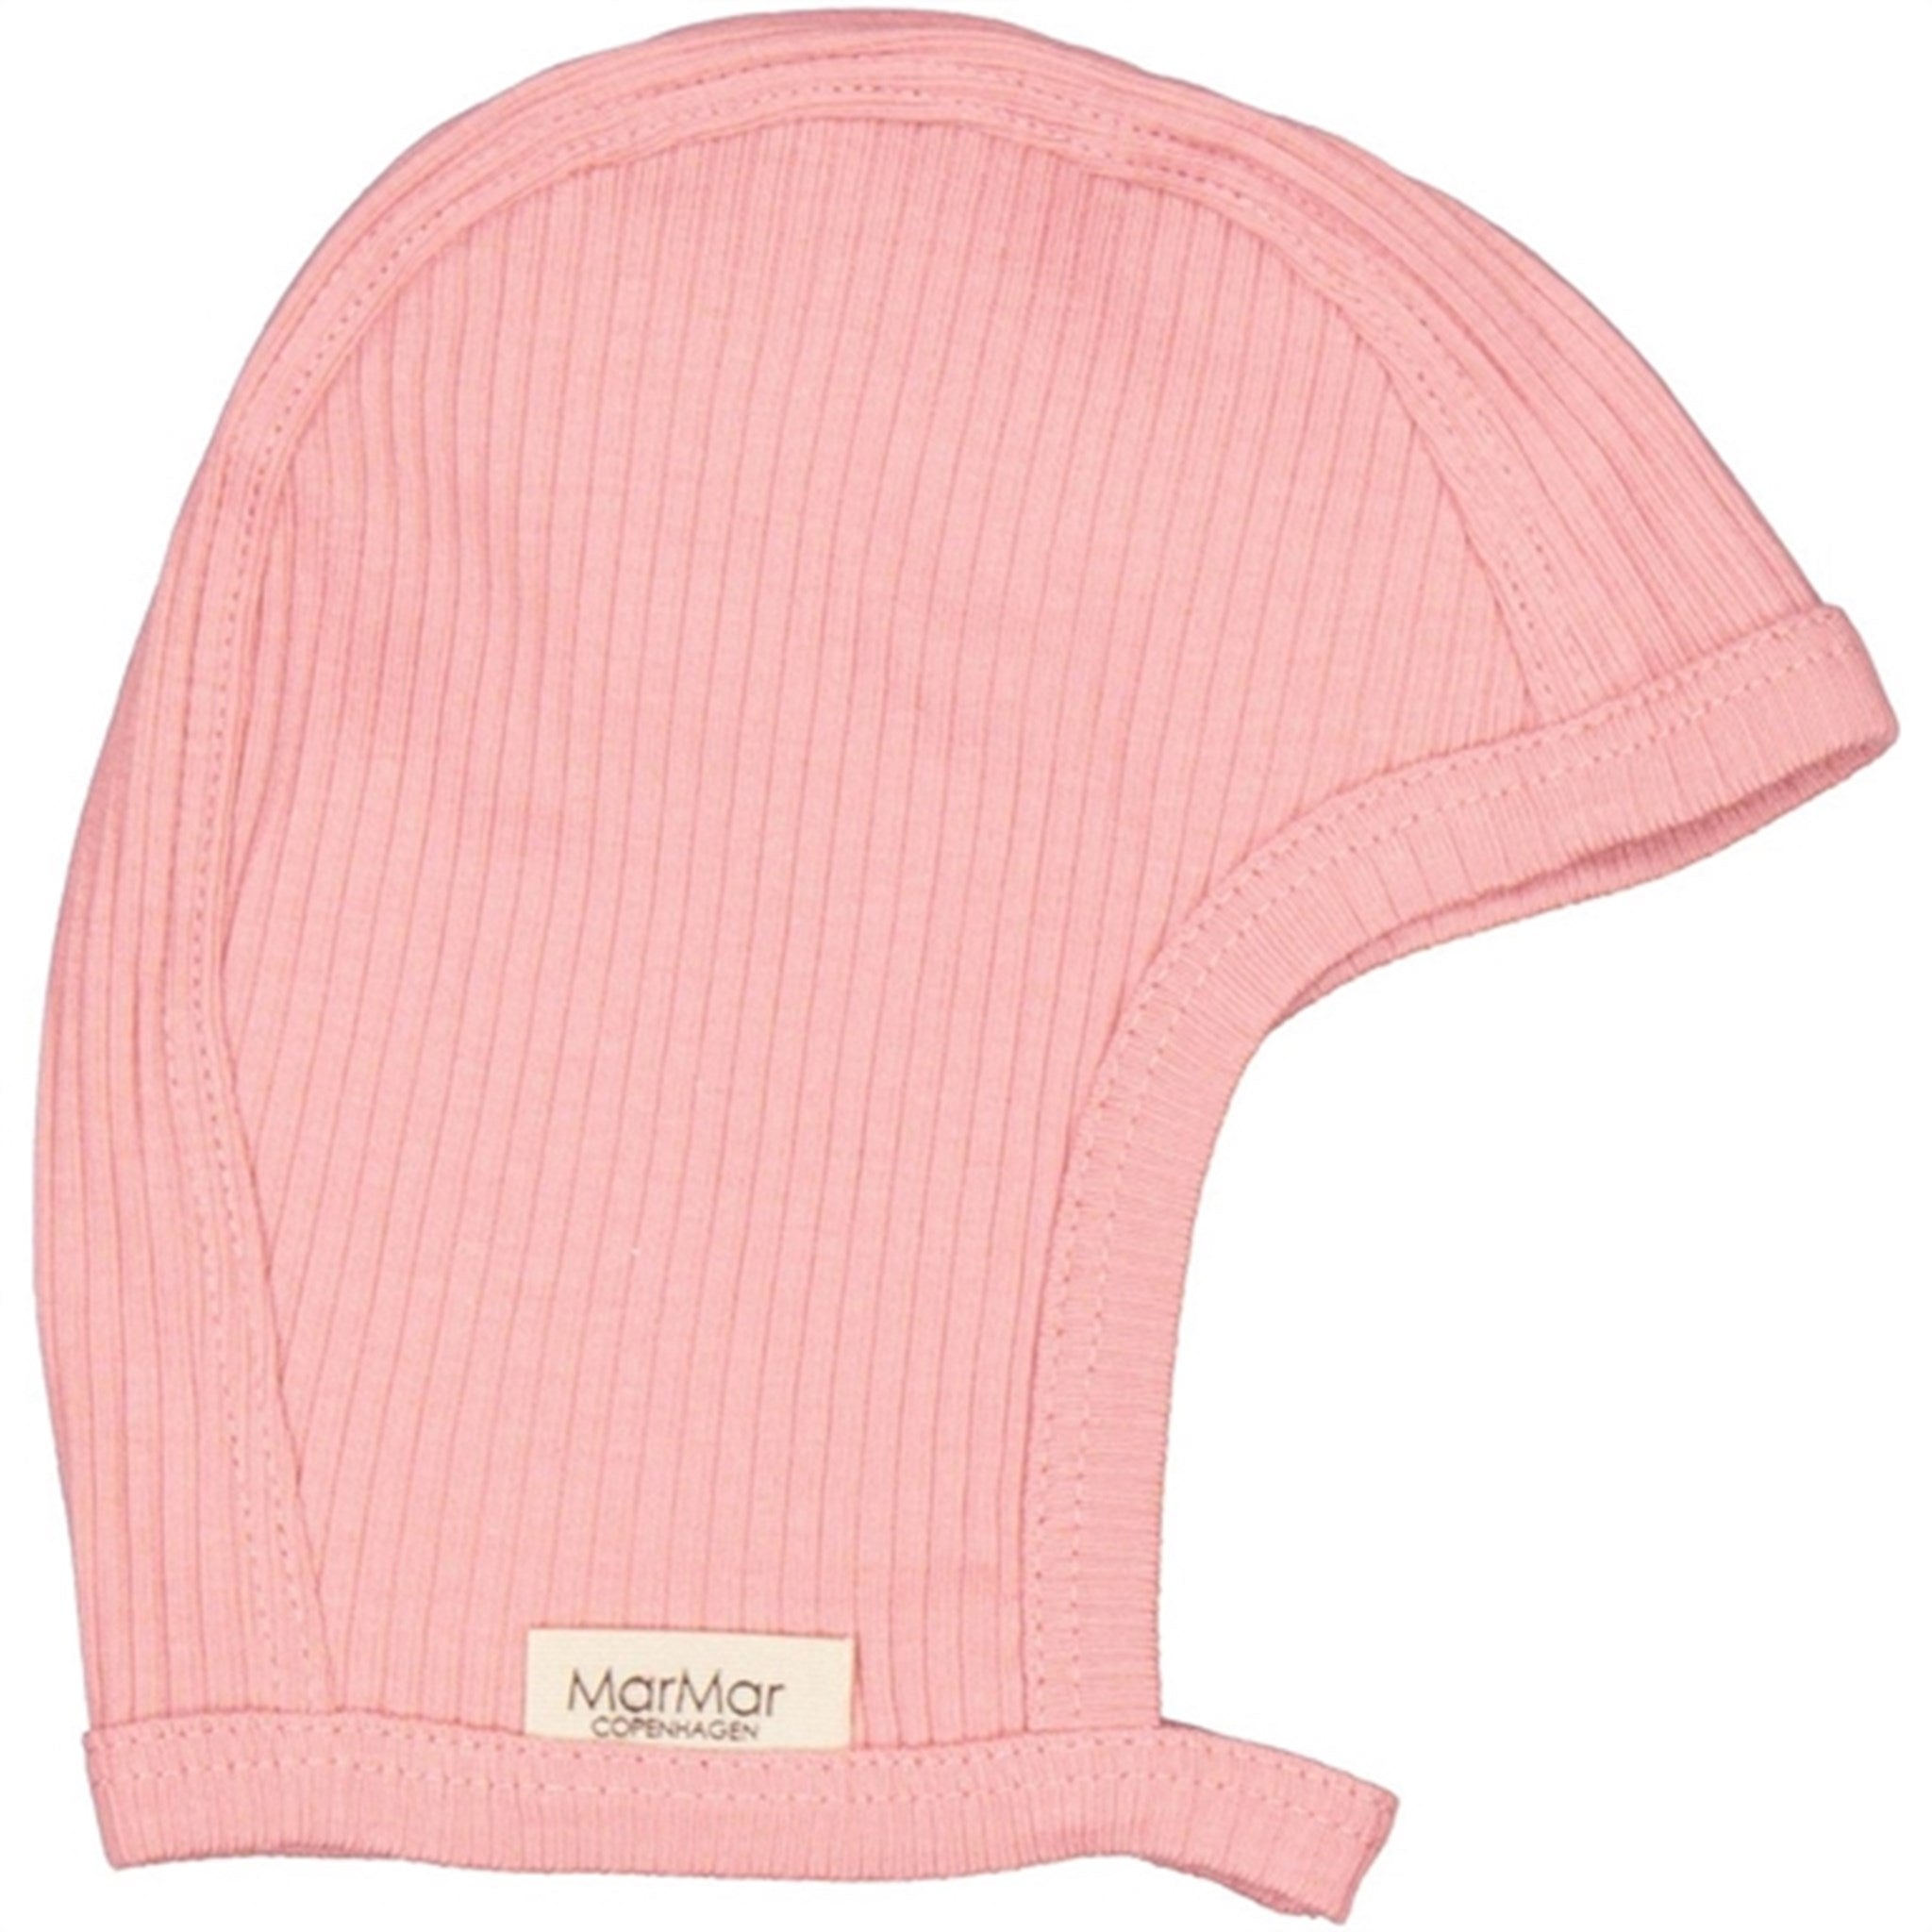 MarMar Modal Pink Delight Hat